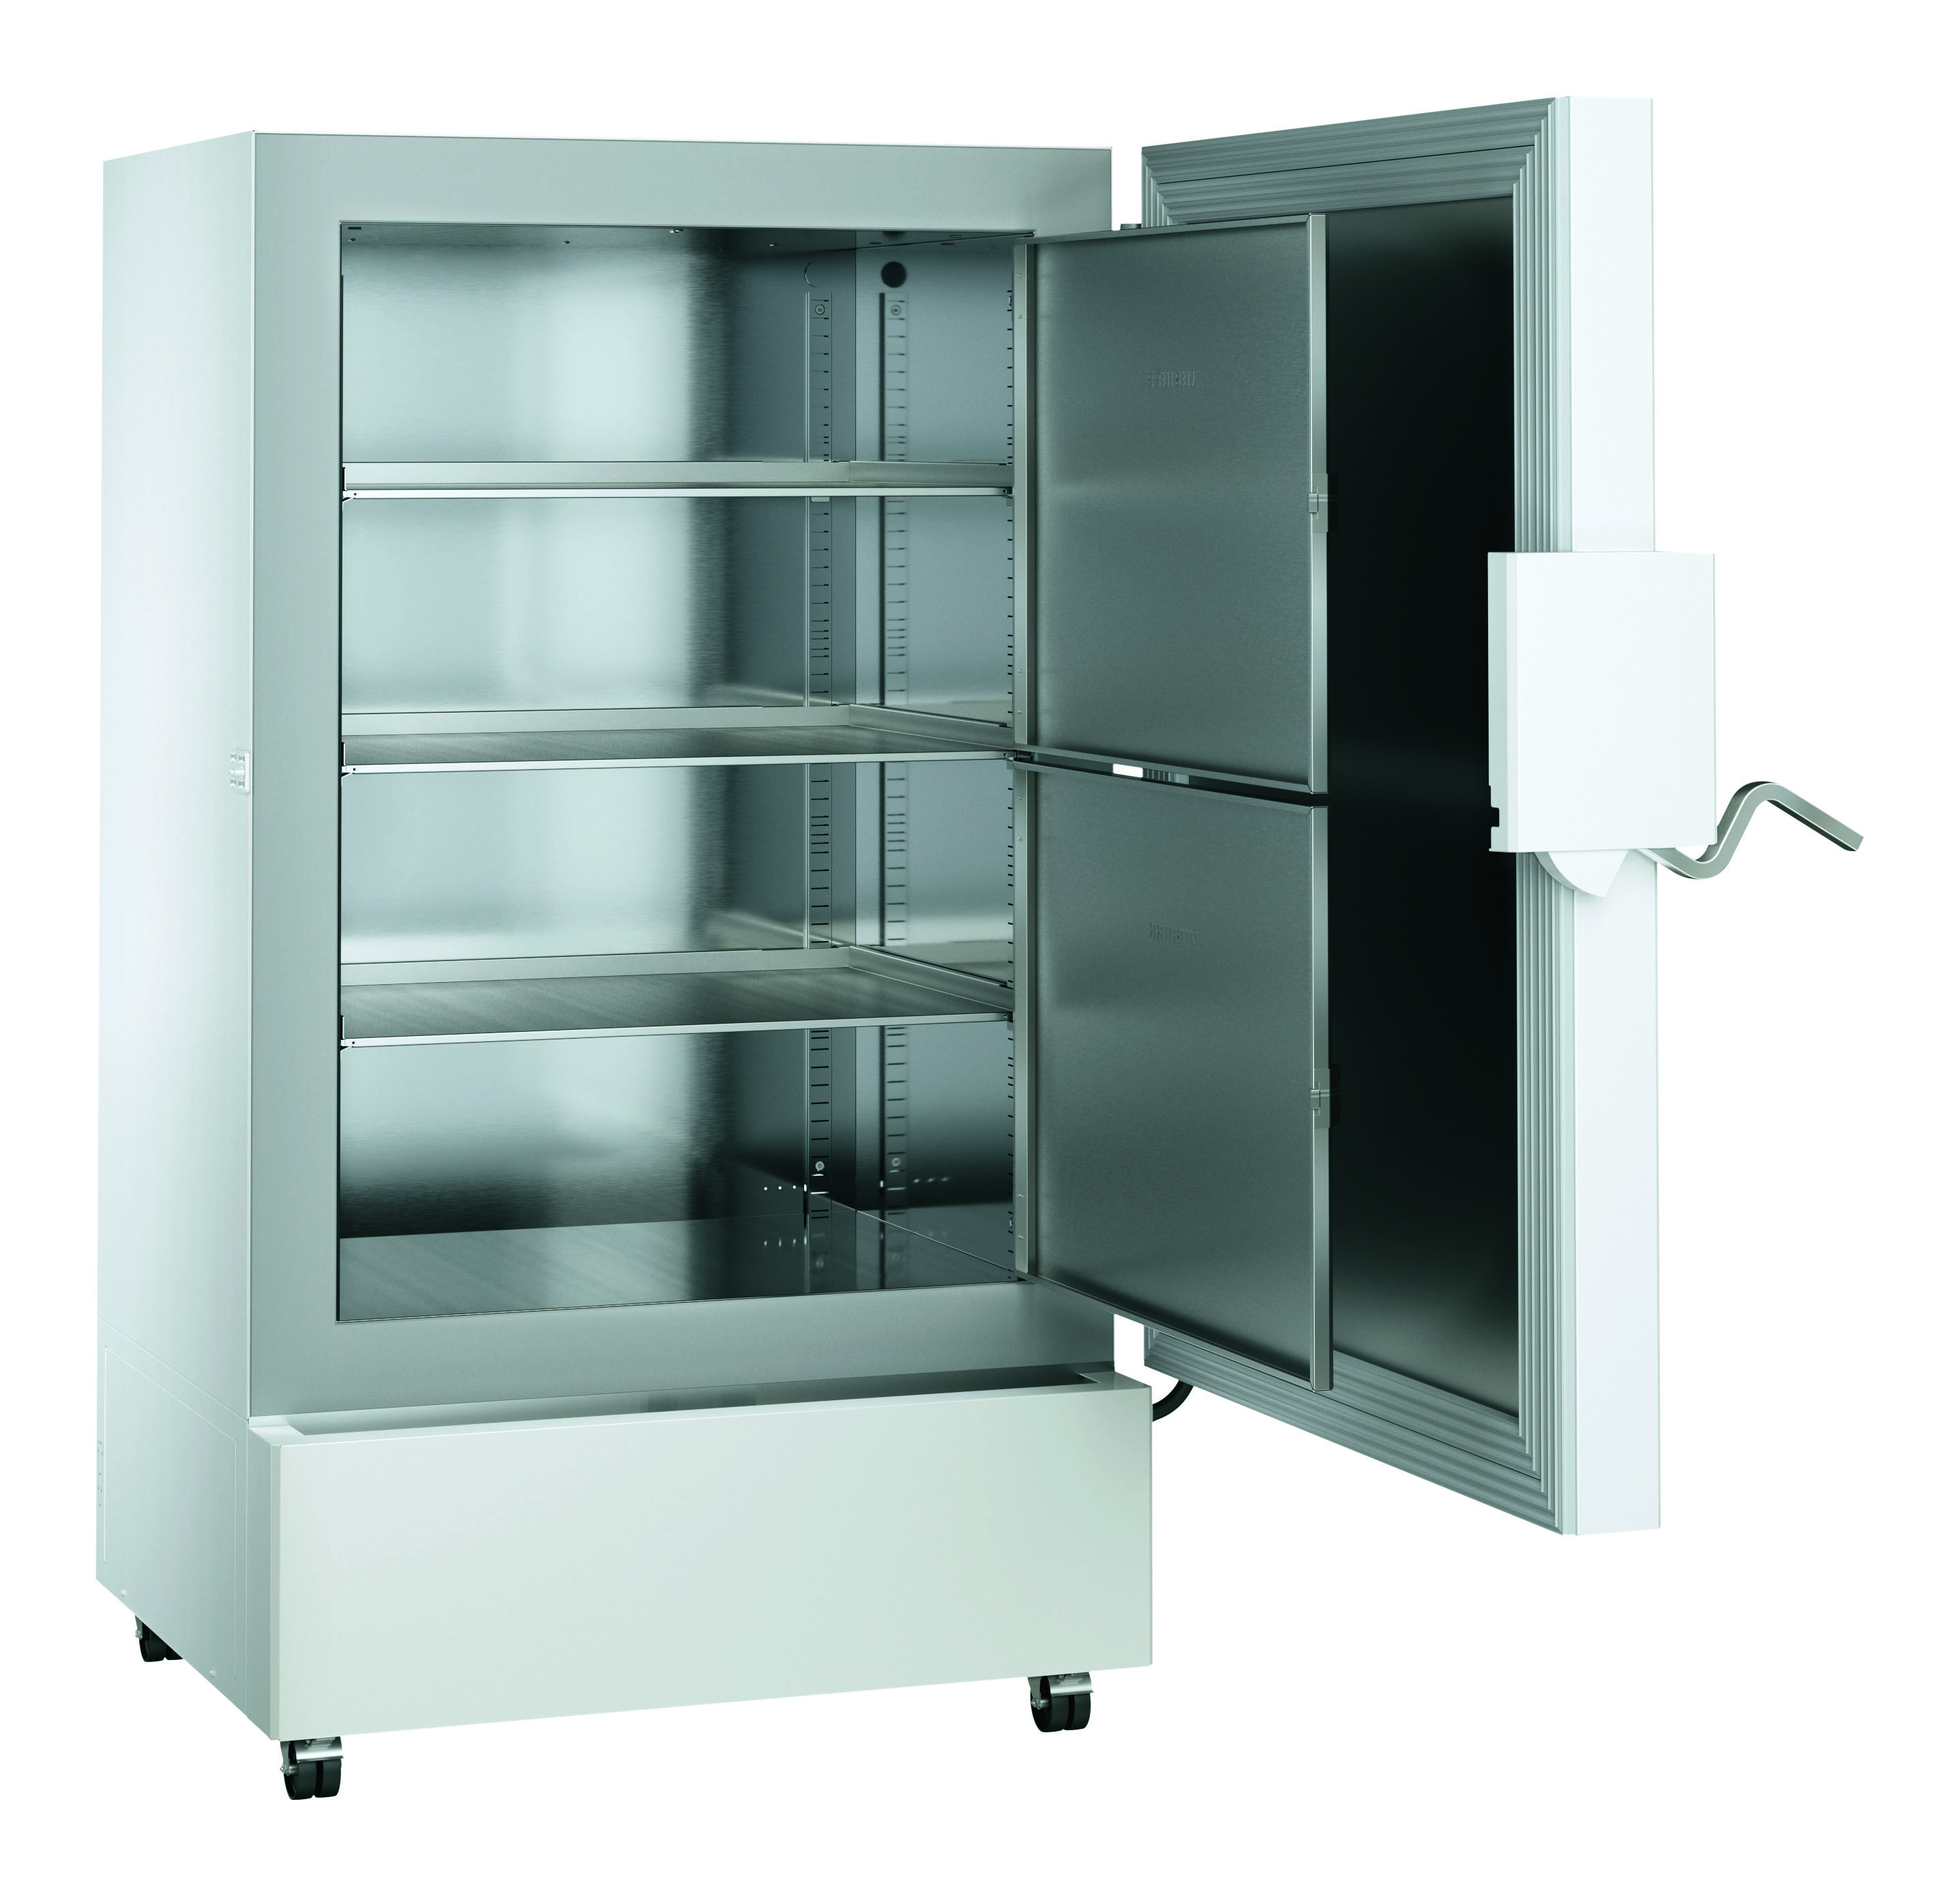 Ultra Low Temperature Freezer - 728 Litre